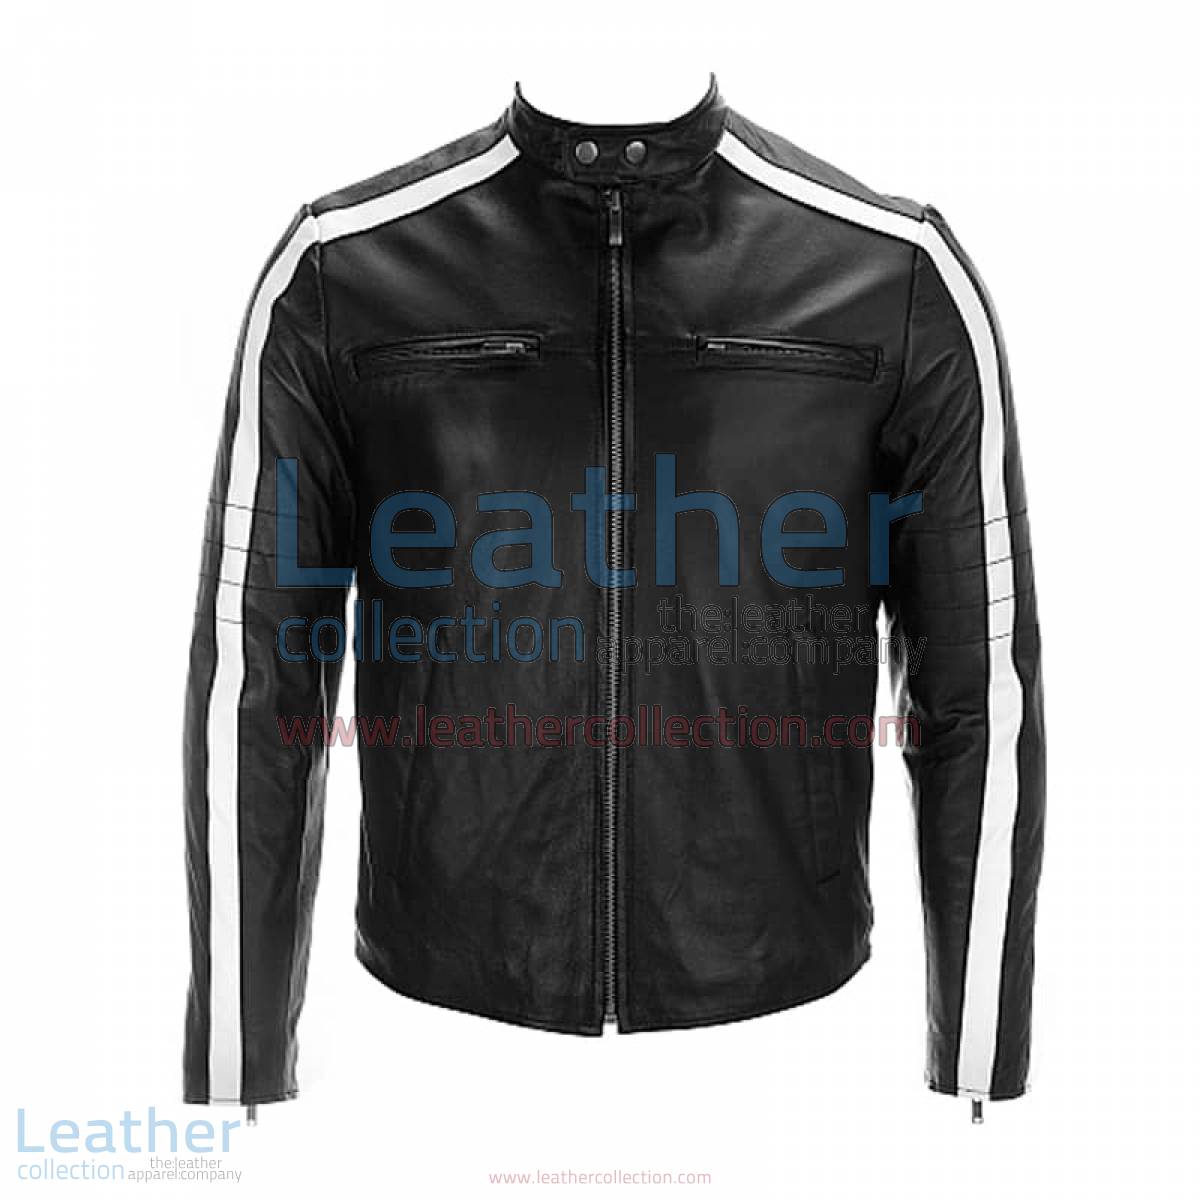 Semi Moto Leather Jacket With Stripes on Sleeves | leather jacket with stripes